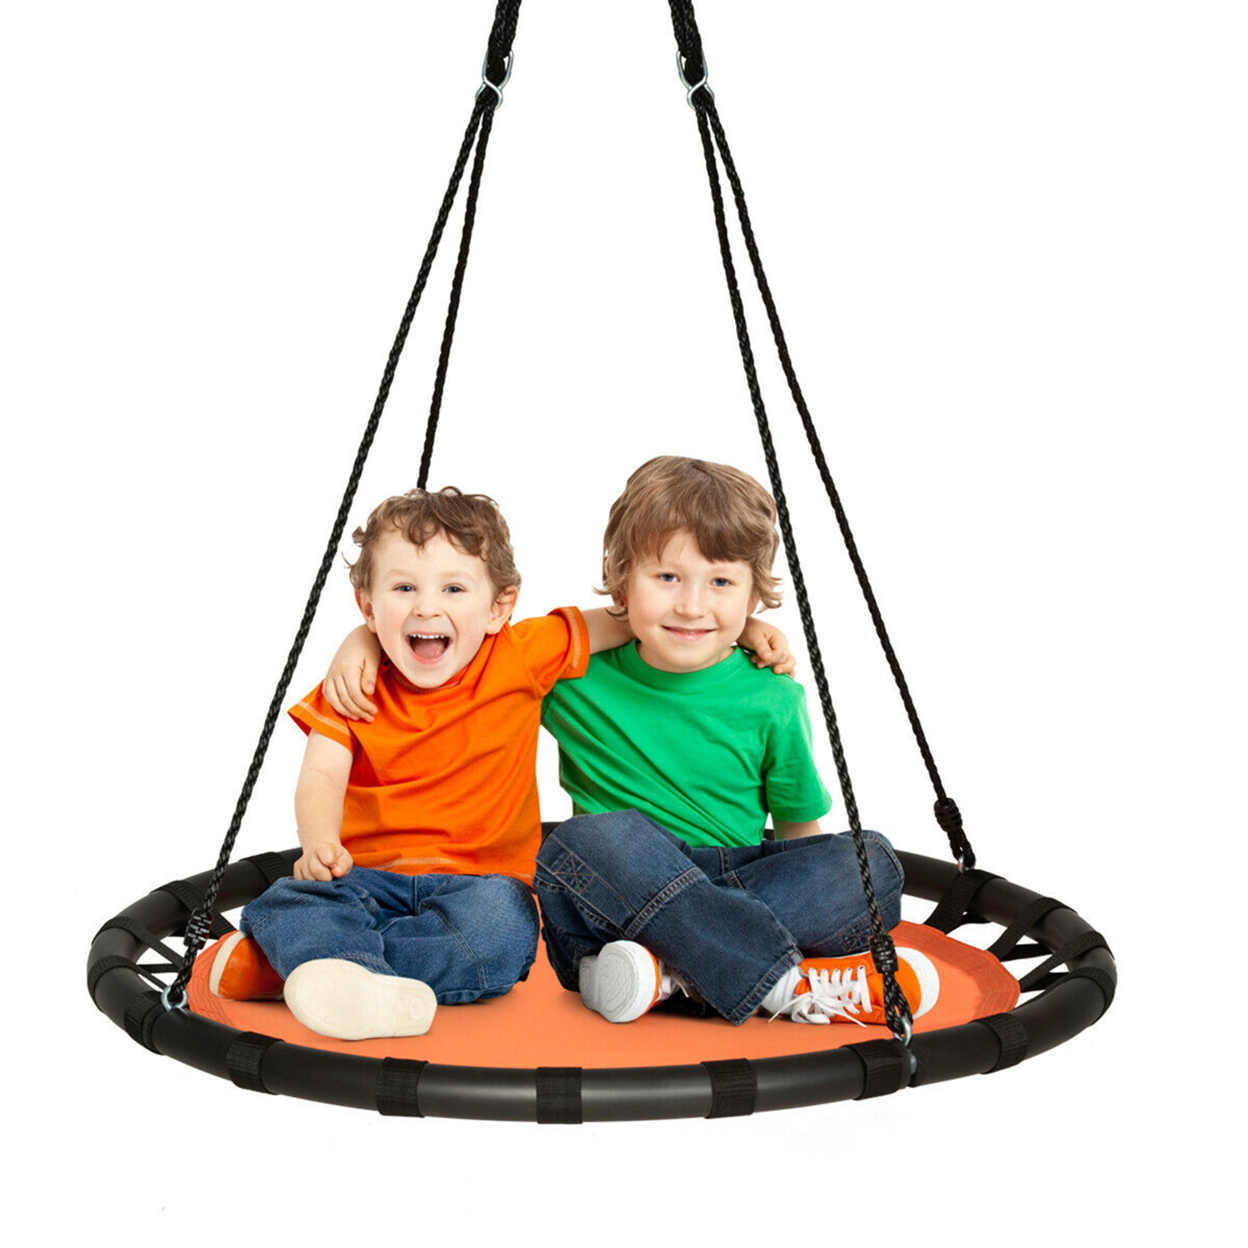 40'' Flying Saucer Round Tree Swing Kids Play Set W/ Adjustable Ropes Outdoor - Orange